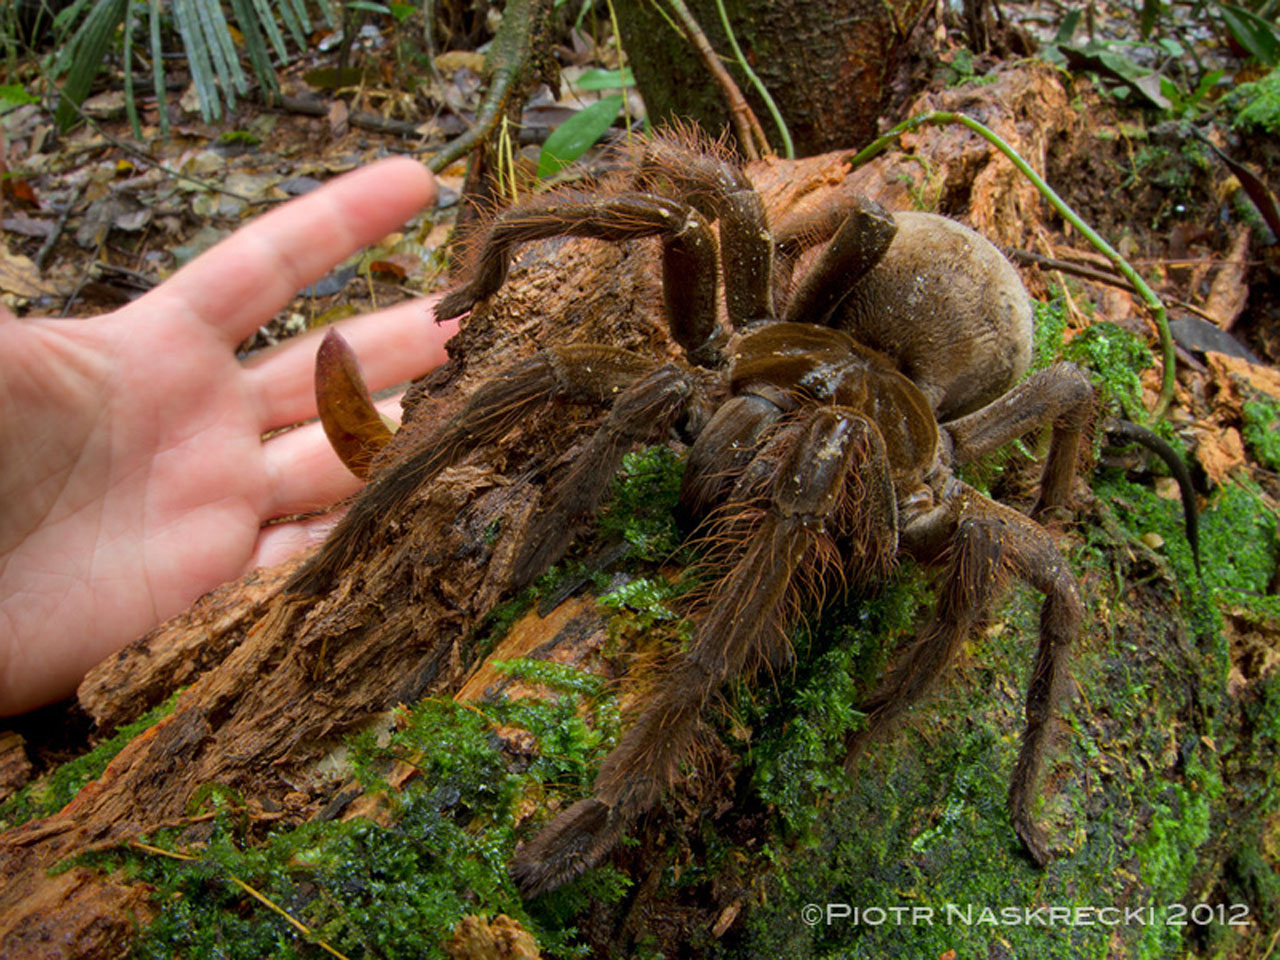 Goliath encounter: Puppy-sized spider surprises scientist in rainforest ...